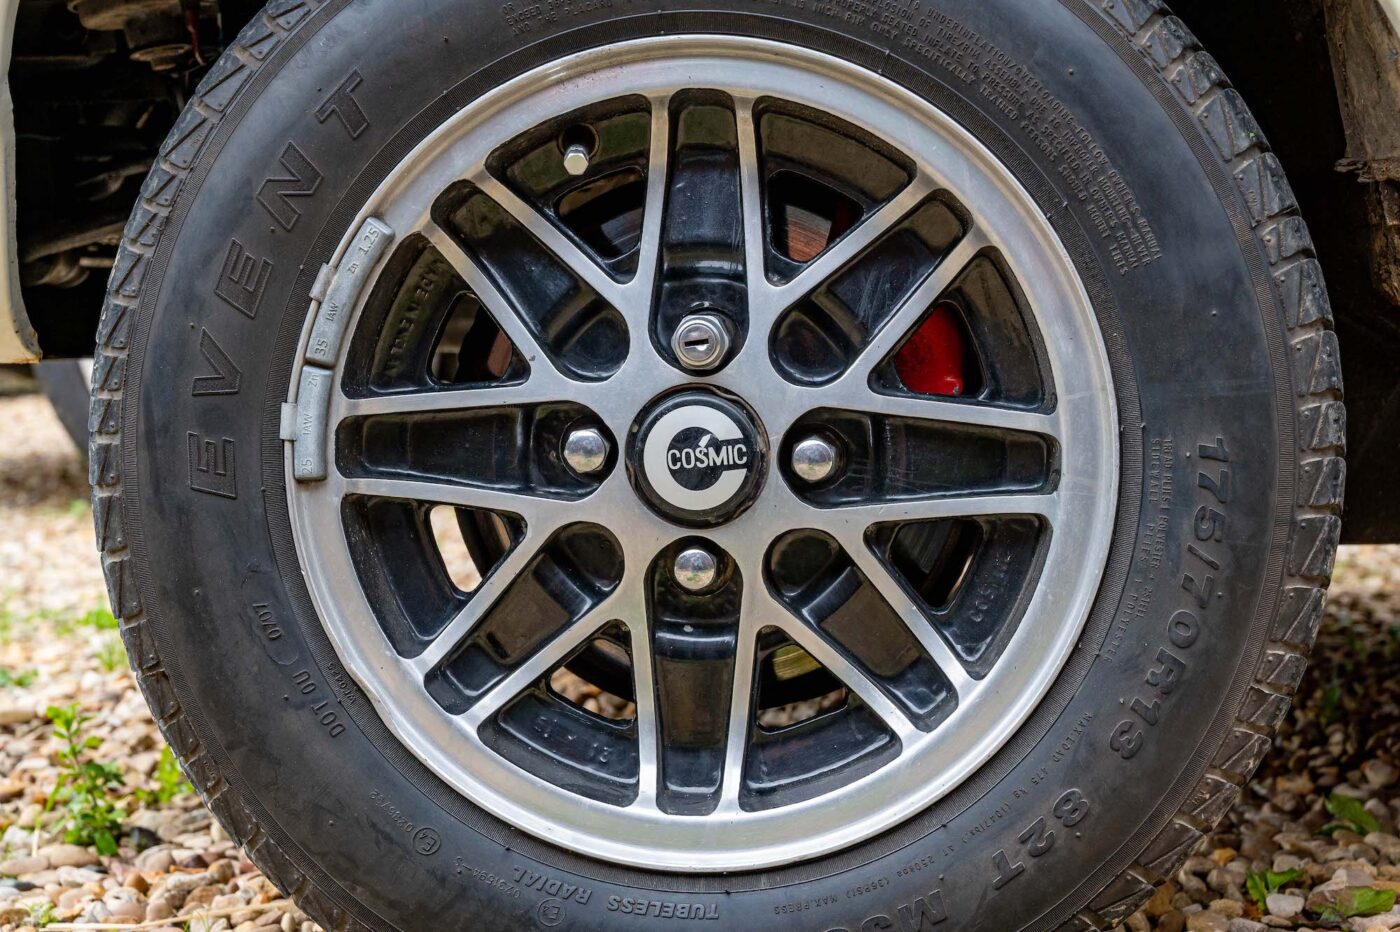 Vauxhall Viva GT Cosmic wheels